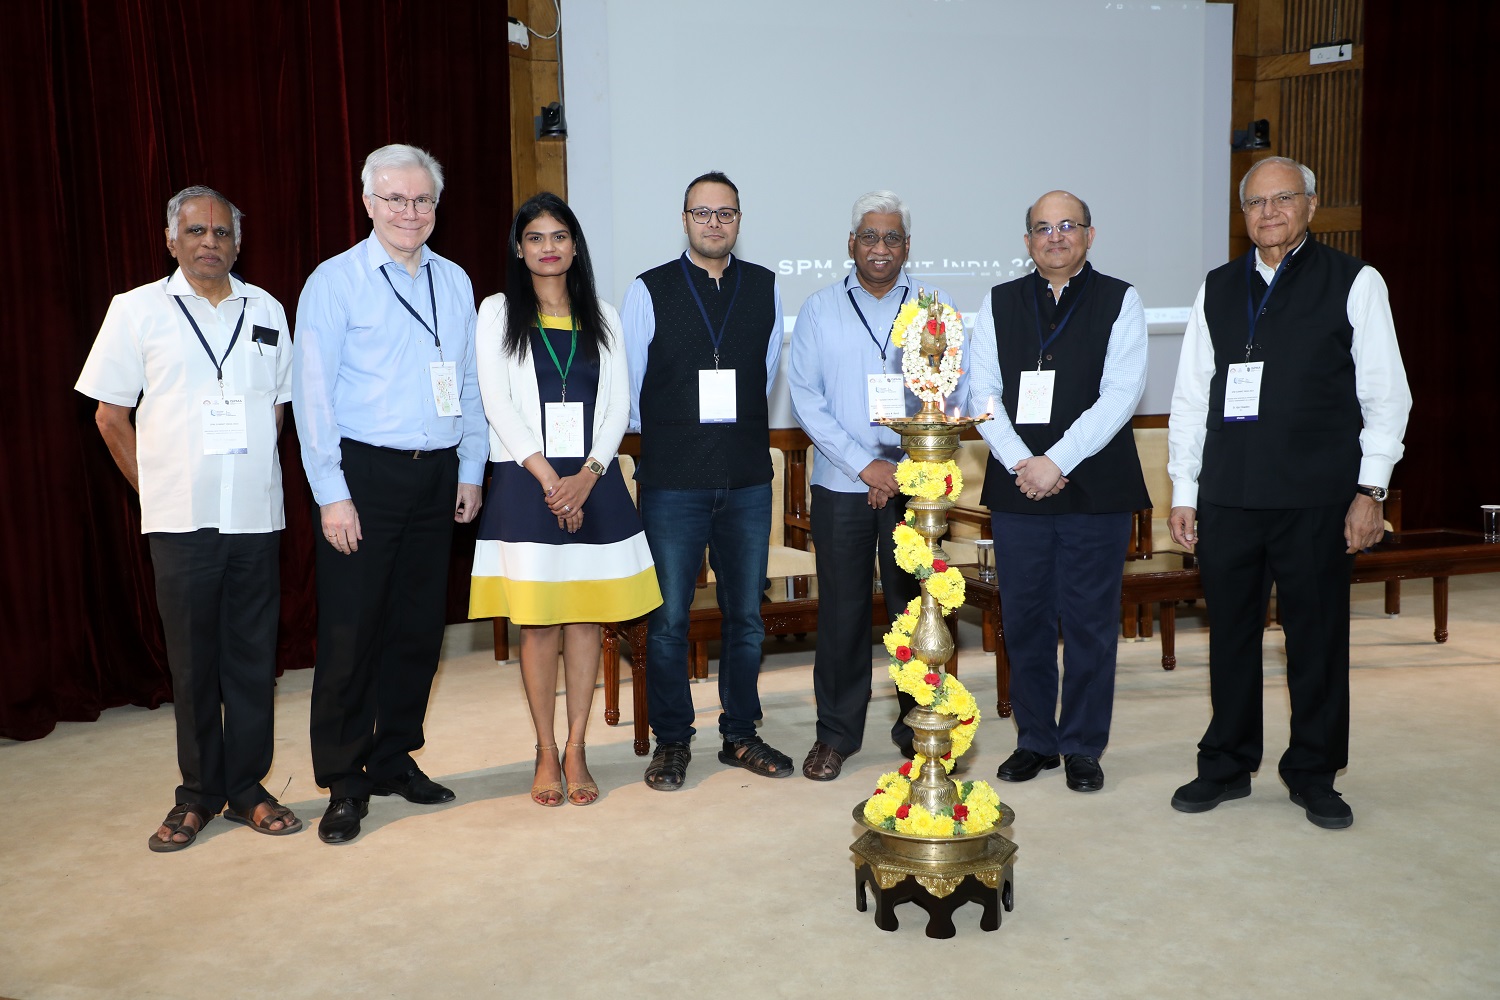 (L-R) Prof. S. Sadagopan, Chairman ISPMA India Chapter, Conference Chair – SPM Summit India 2023, Hans-Bernd Kittlaus, Chairman ISPMA e.V, Prof. Spurthy Dharanikota, Program Chair (Academic Track), IIMB, Prof. Shankhadeep Banerjee, Chairperson, Centre for Software & Information Technology Management, IIMB, Prof. Rajendra Bandi, Dean, Administration, IIMB, Prof. Rishikesha T Krishnan, Director, IIMB, and Dr. Ajai Chowdhry, Founder HCL inaugurate the SPM Summit India on 3rd March 2023 at IIMB.